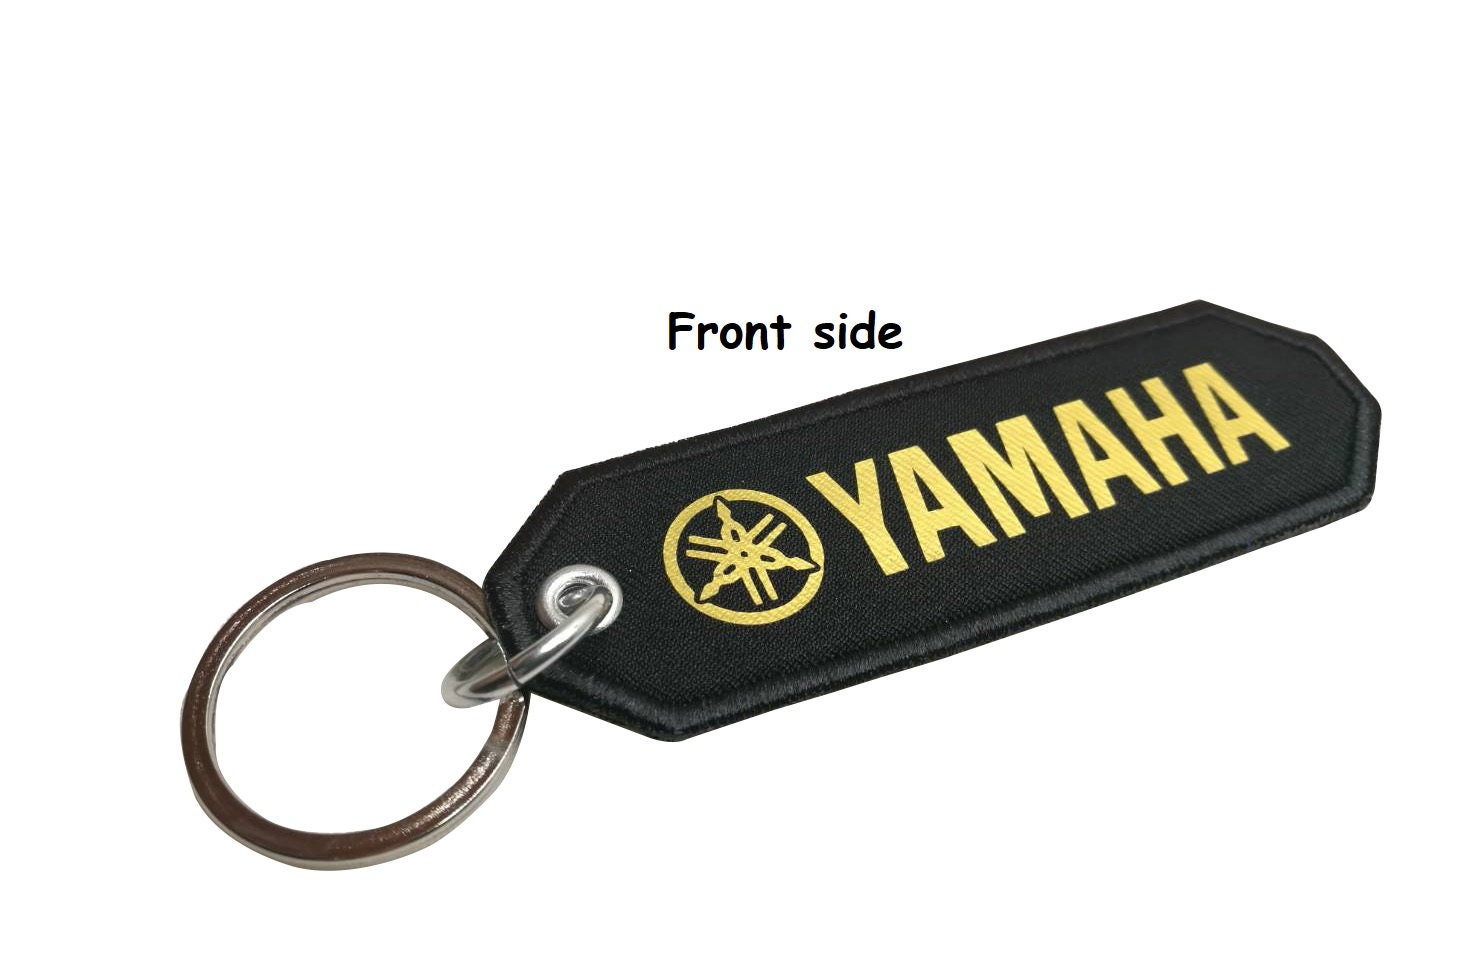 Schlüsselanhänger Yamaha B